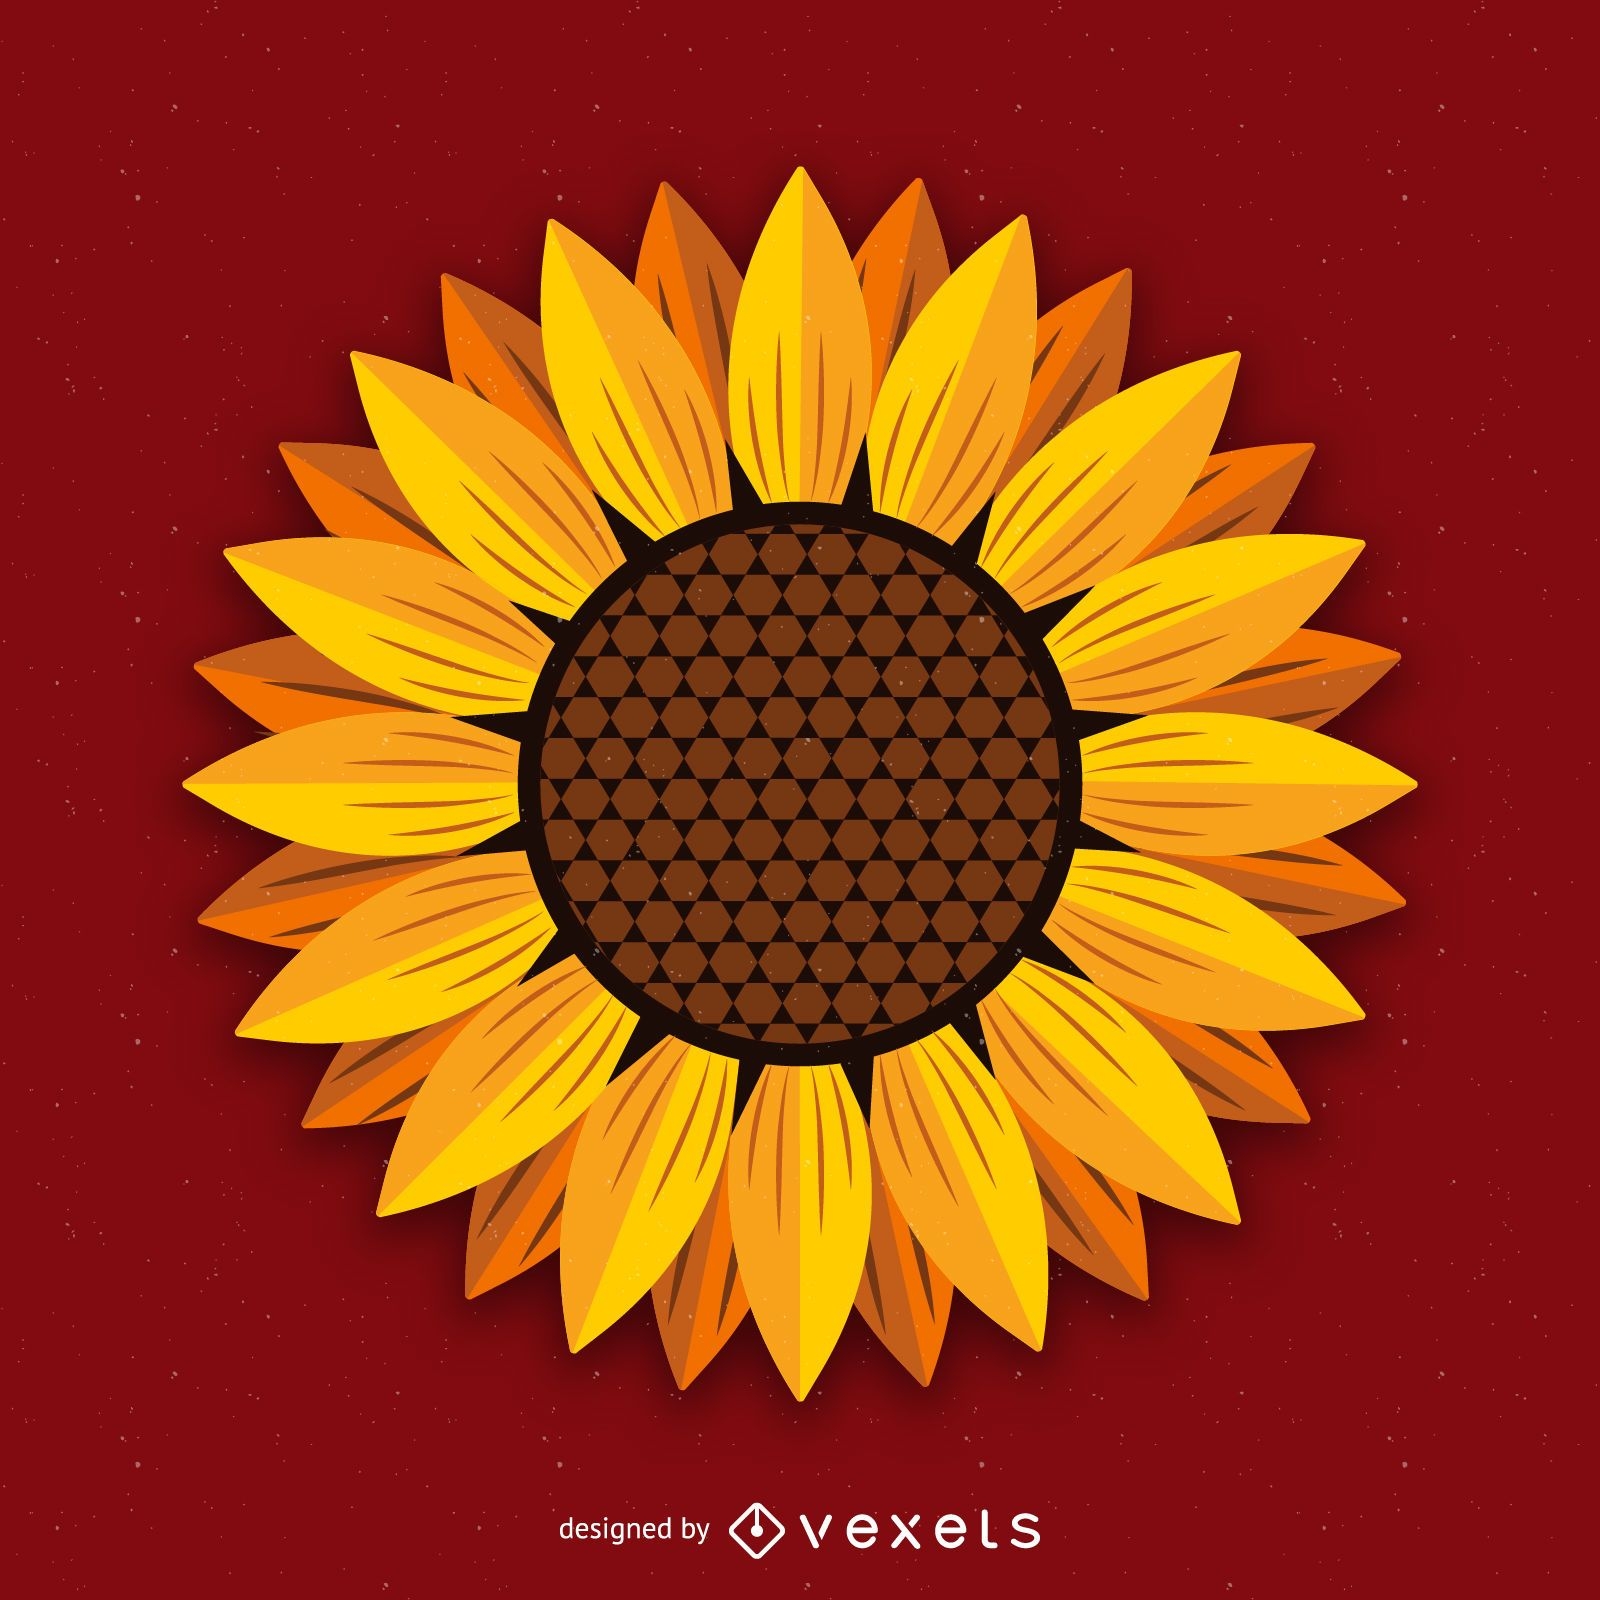 Isolated sunflower illustration